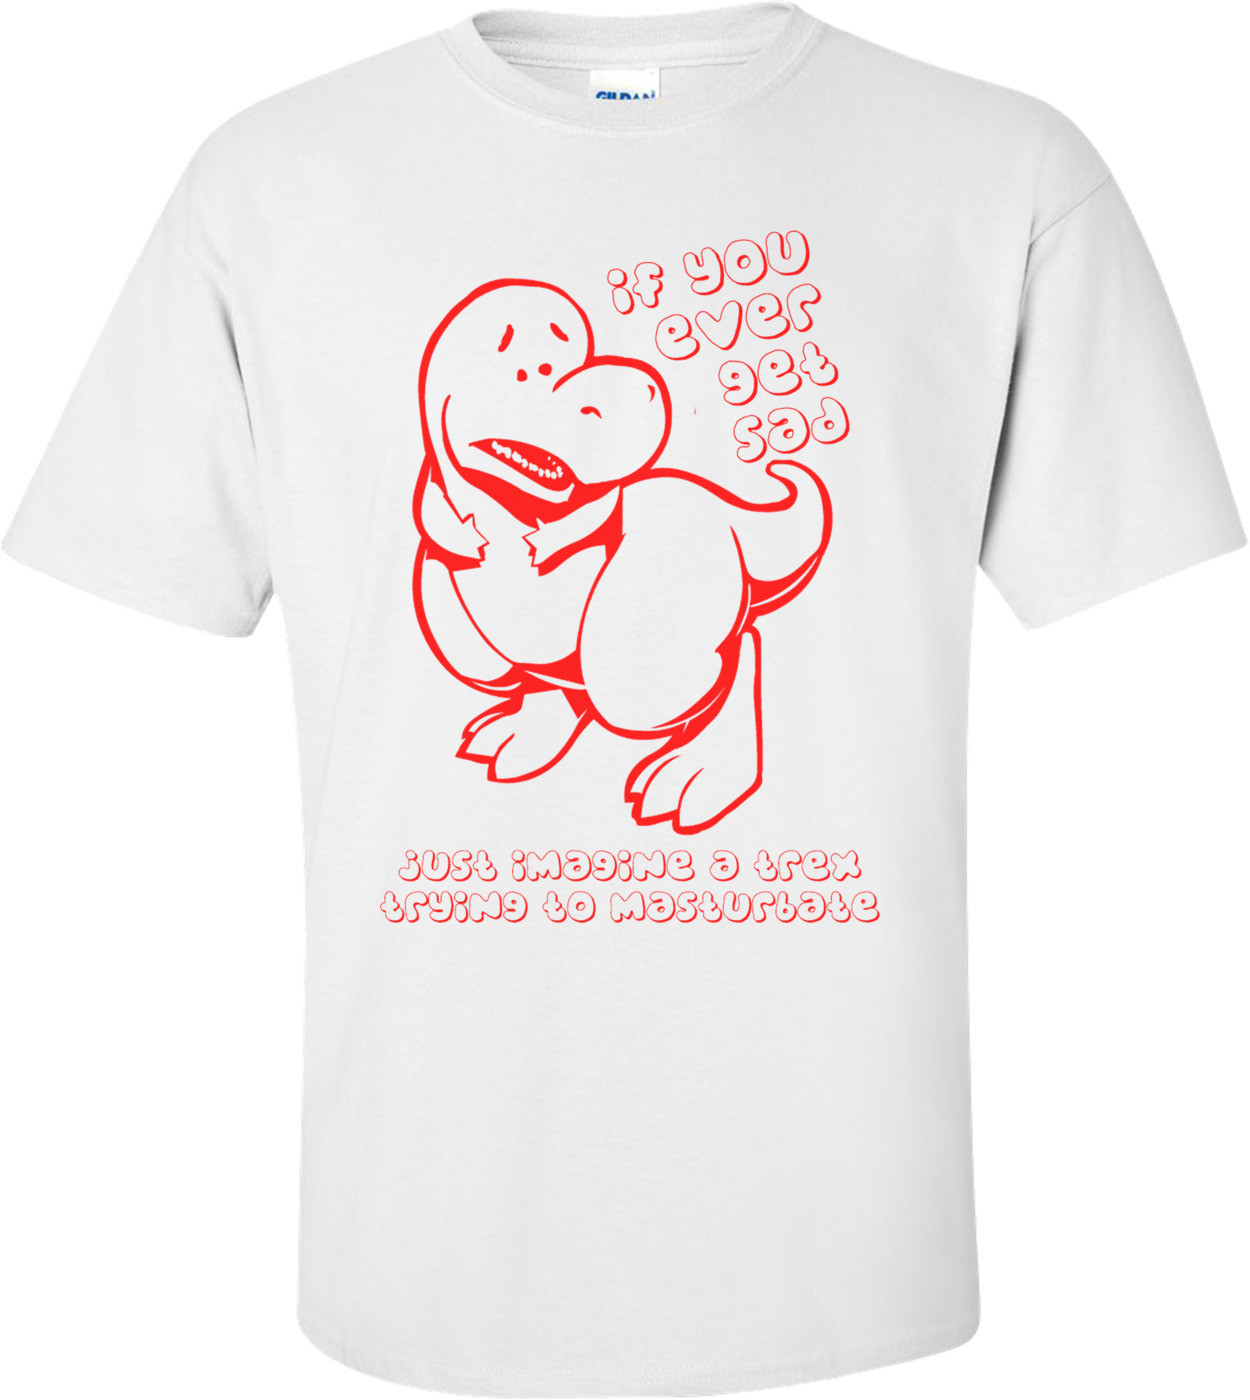 If You Ever Get Sad Think Of A T-rex...  Shirt